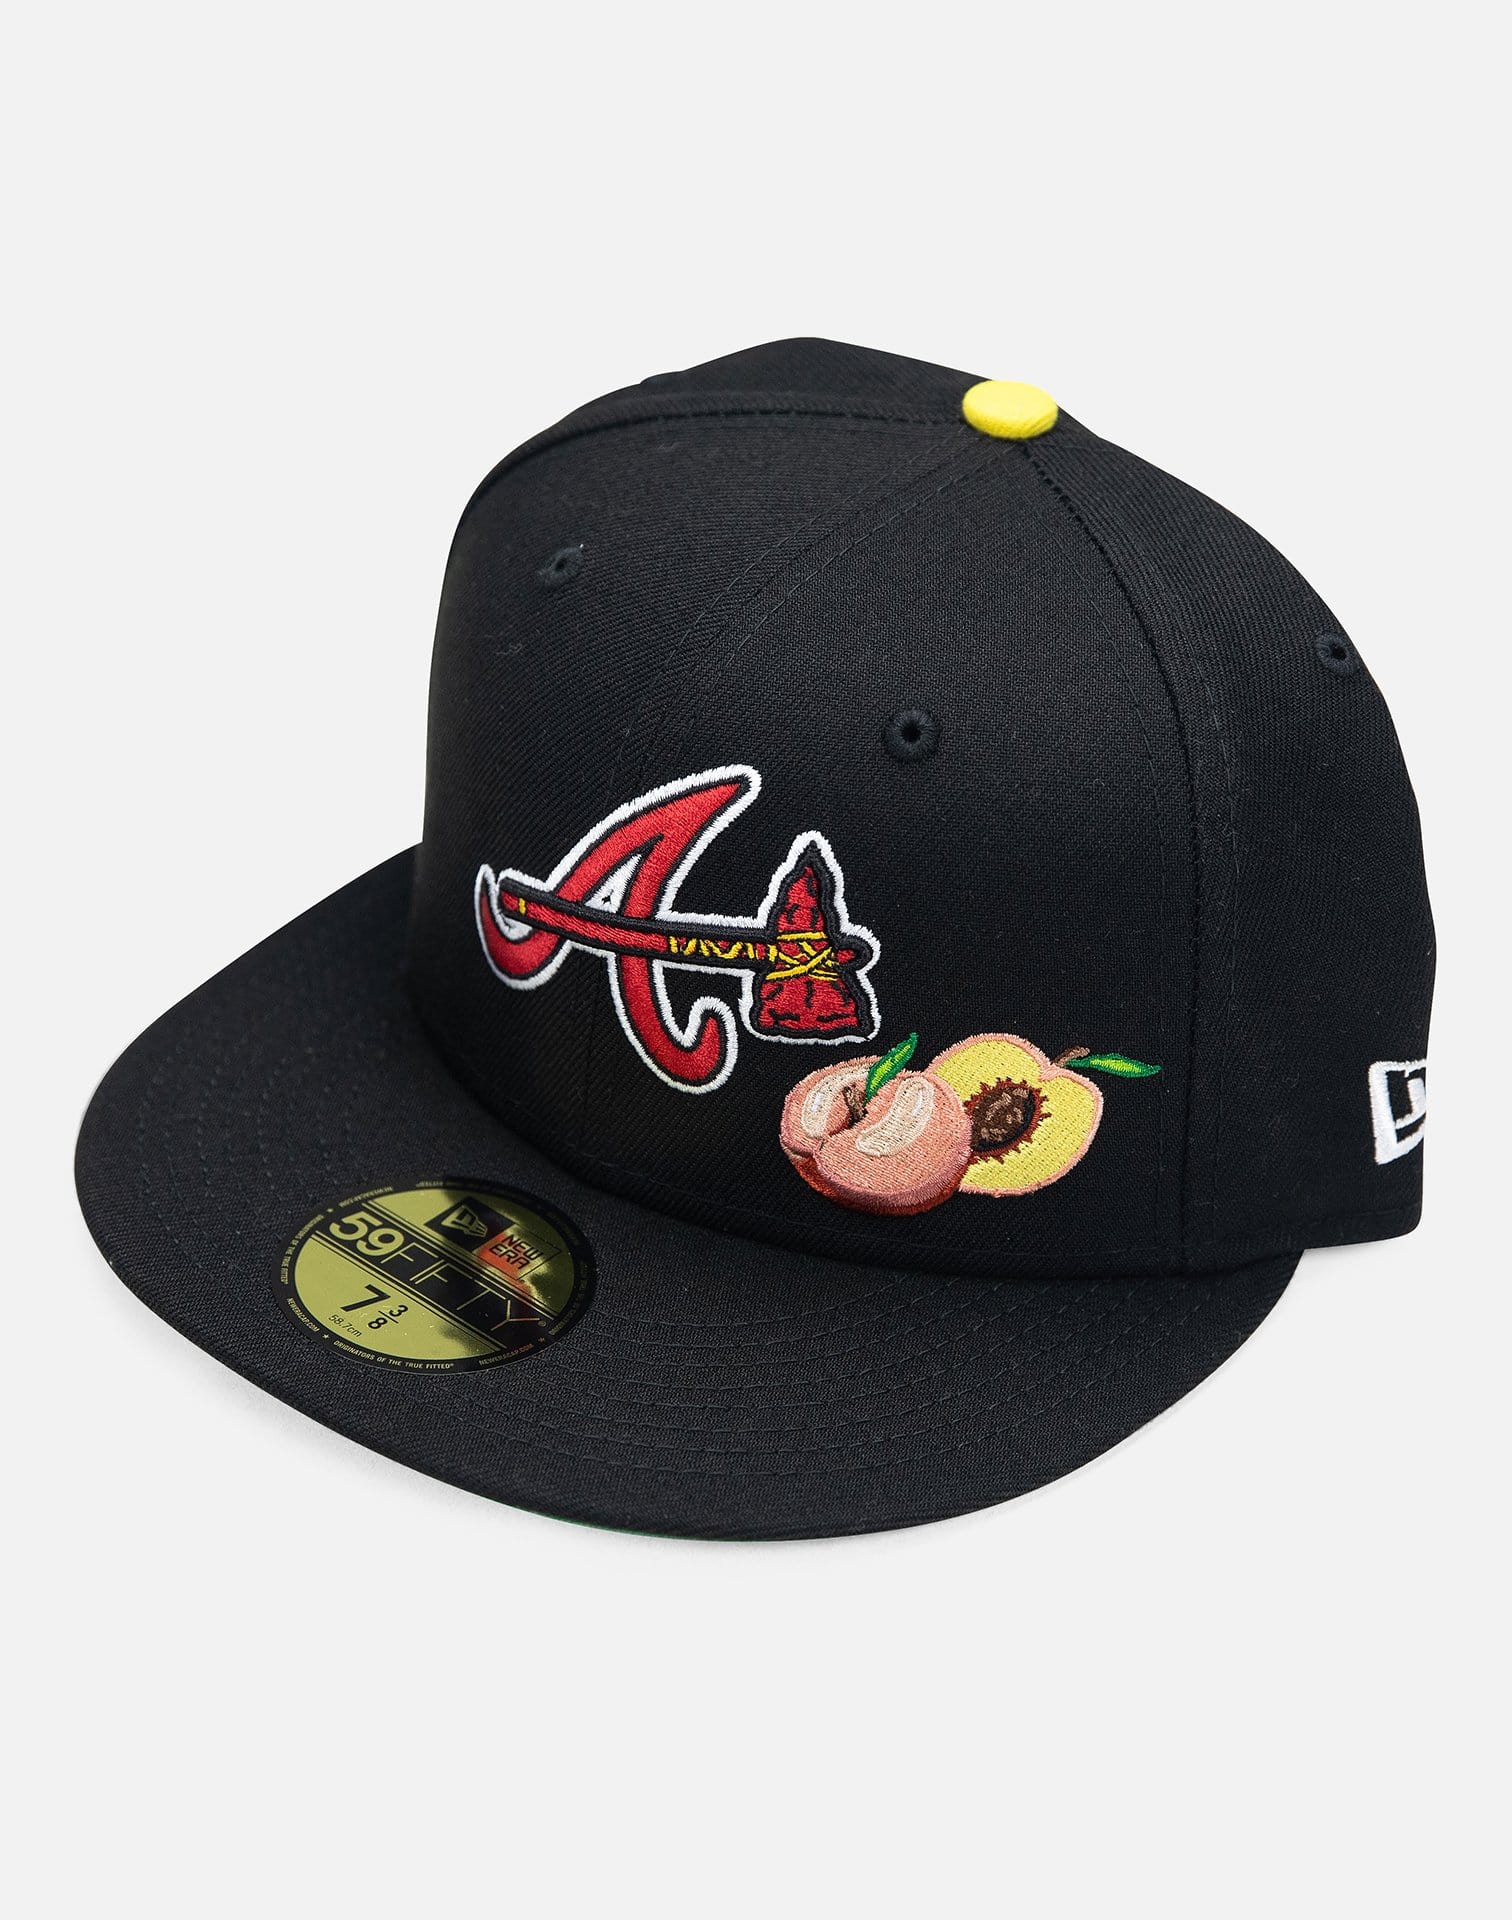 Atlanta Braves Hat Fitted / Men S New Era Black Atlanta Braves Primary